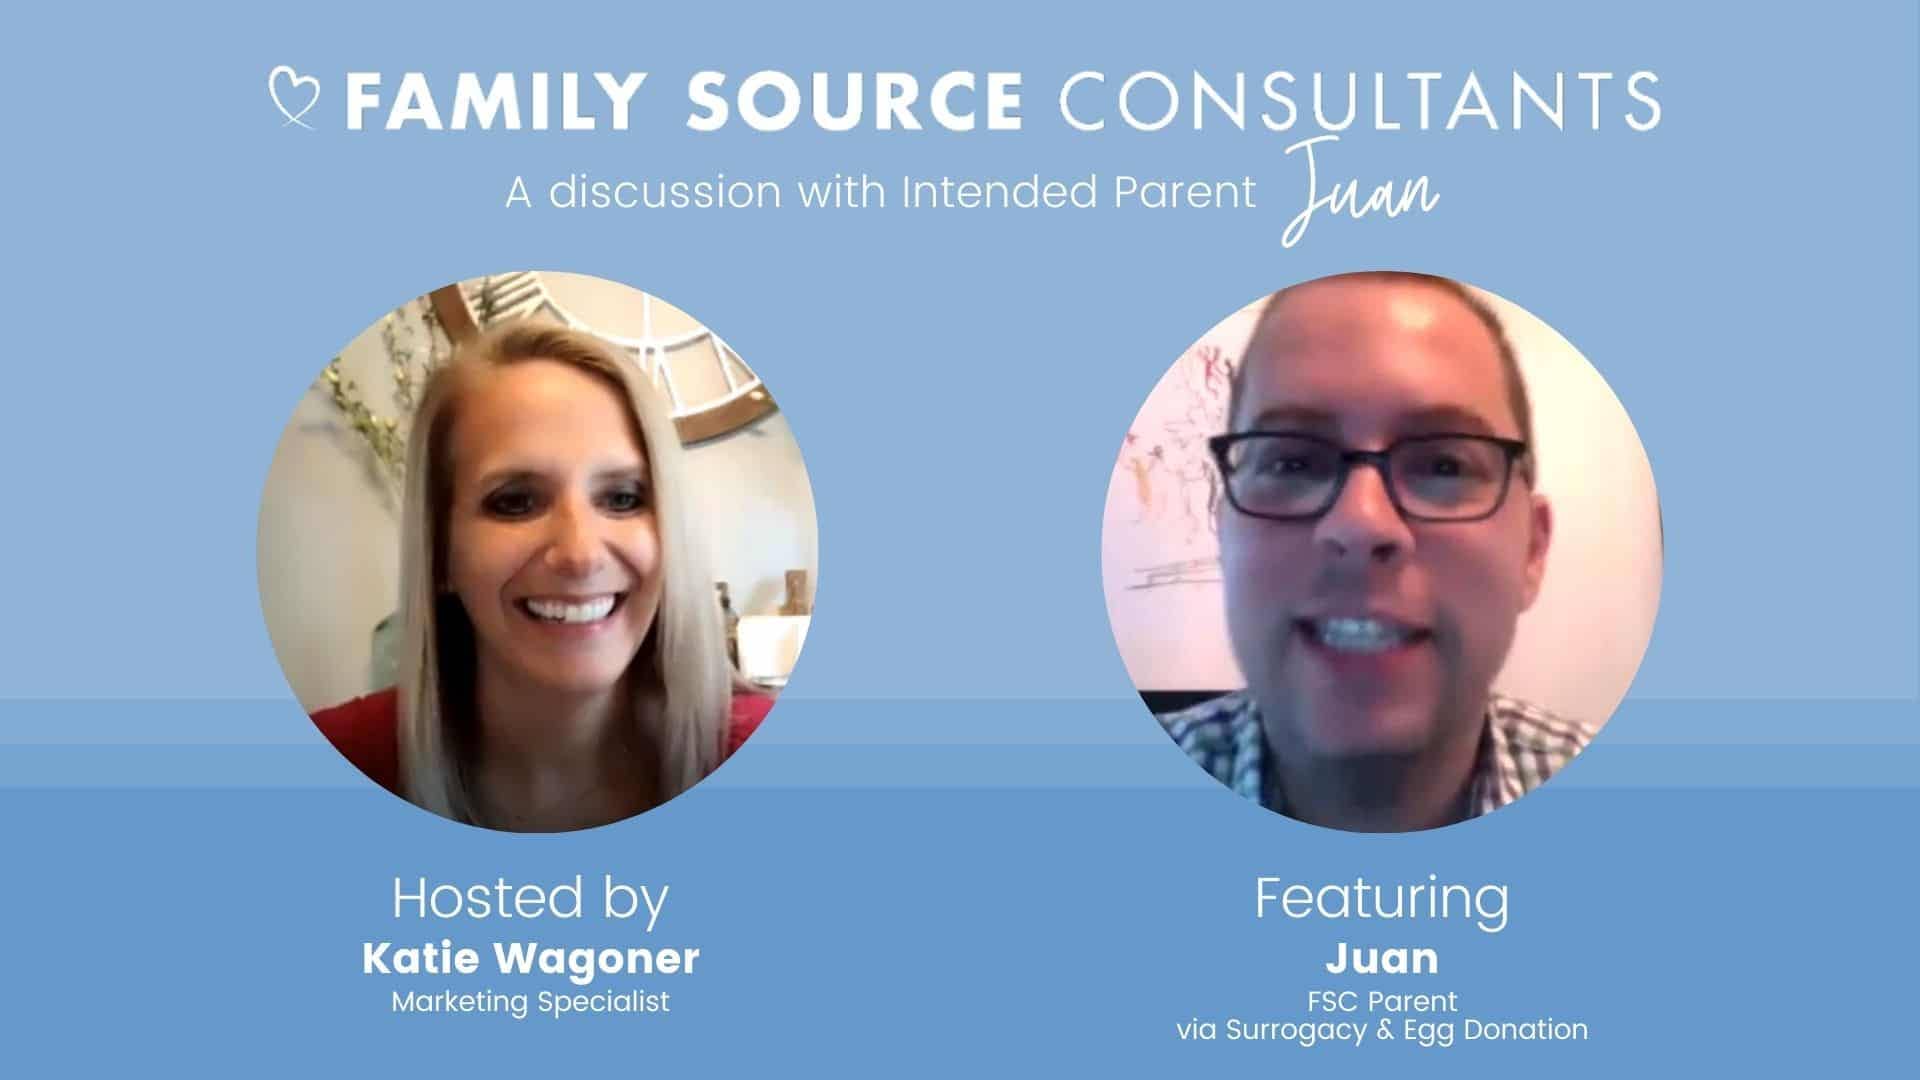 an interview with juan, parent via surrogacy & egg donation